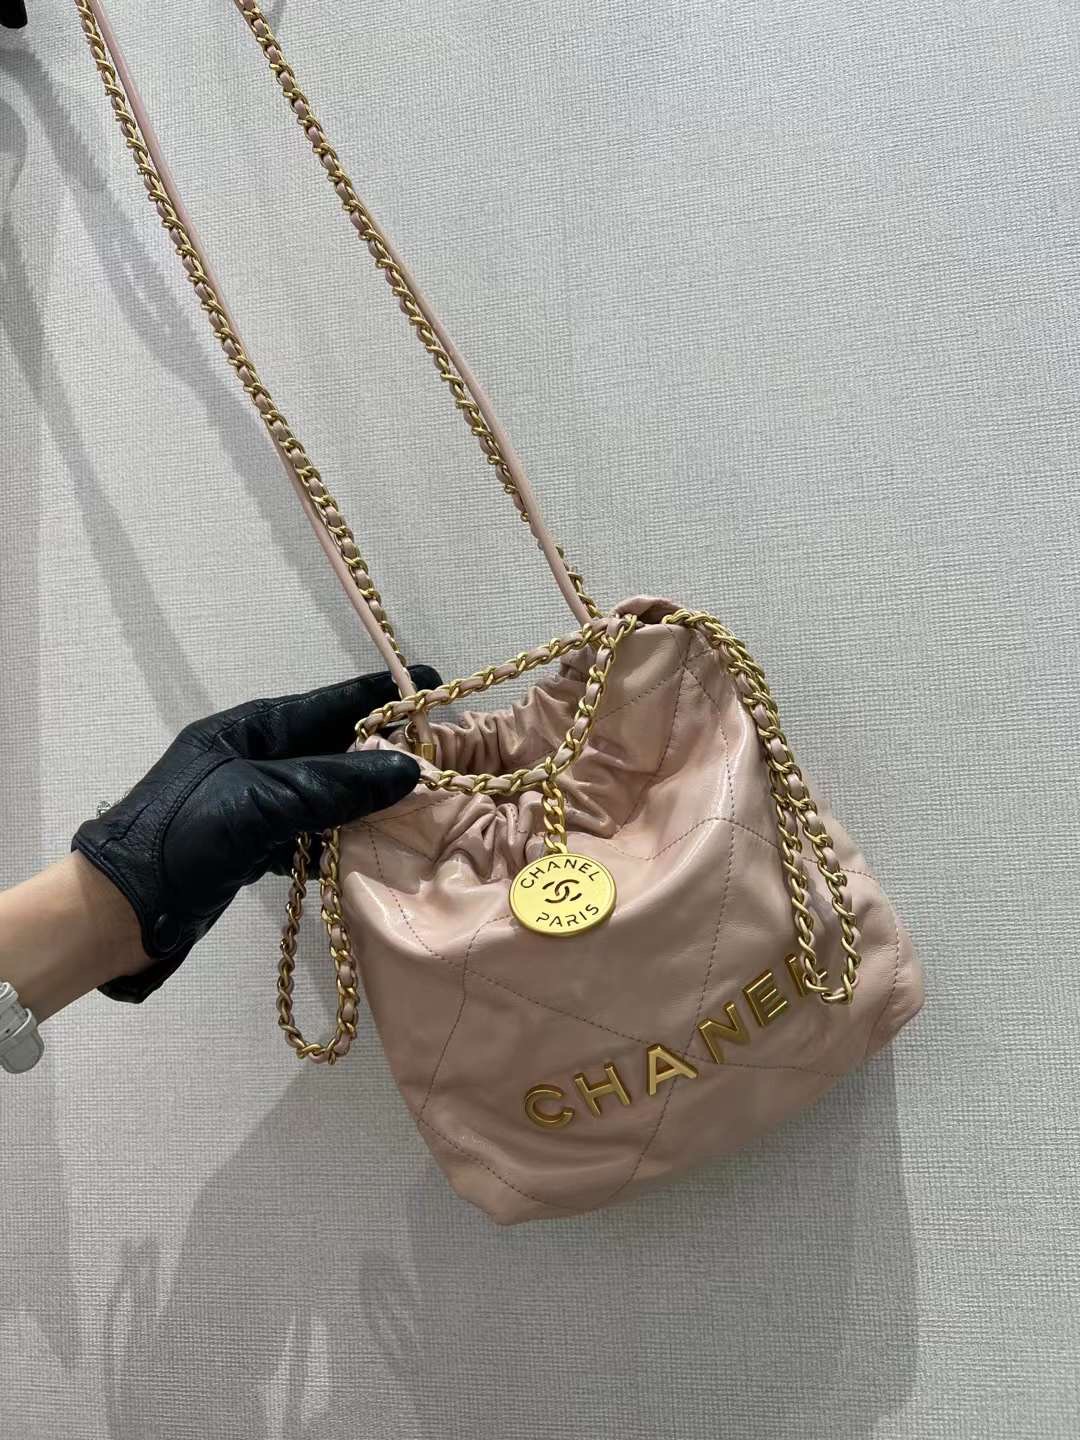 【P1880】Chanel女包货源 香奈儿22手袋迷你款 粉色菱格纹链条单肩斜挎包